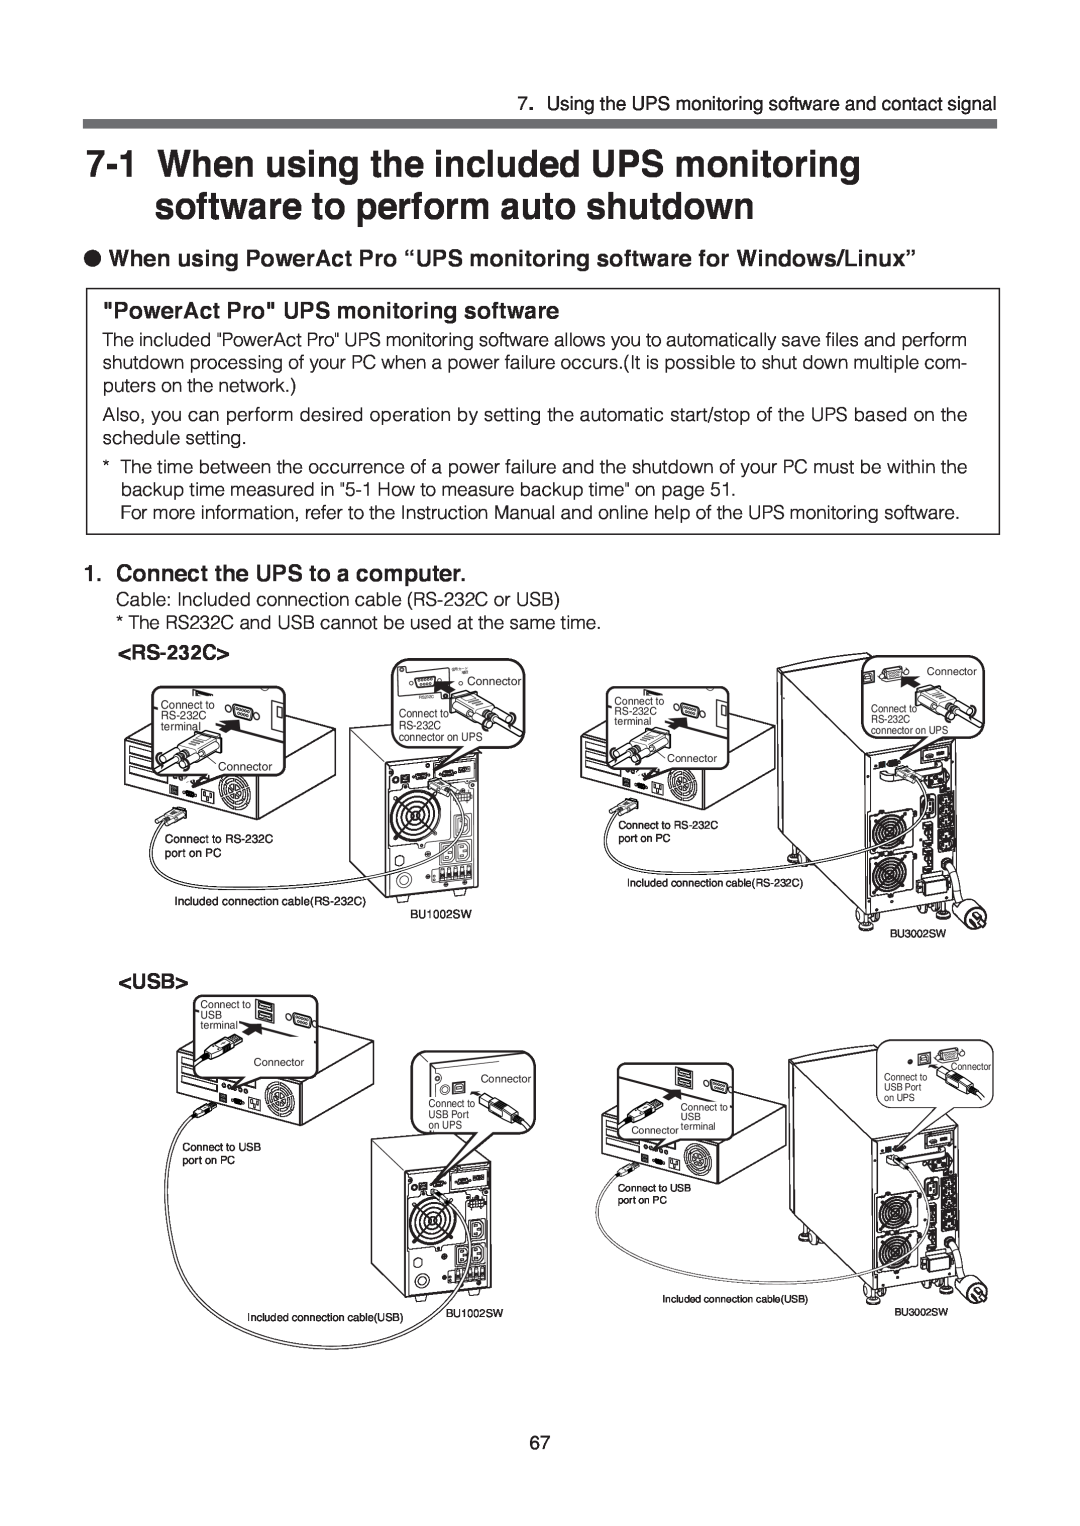 Omron BU1002SW When using PowerAct Pro “UPS monitoring software for Windows/Linux”, PowerAct Pro UPS monitoring software 